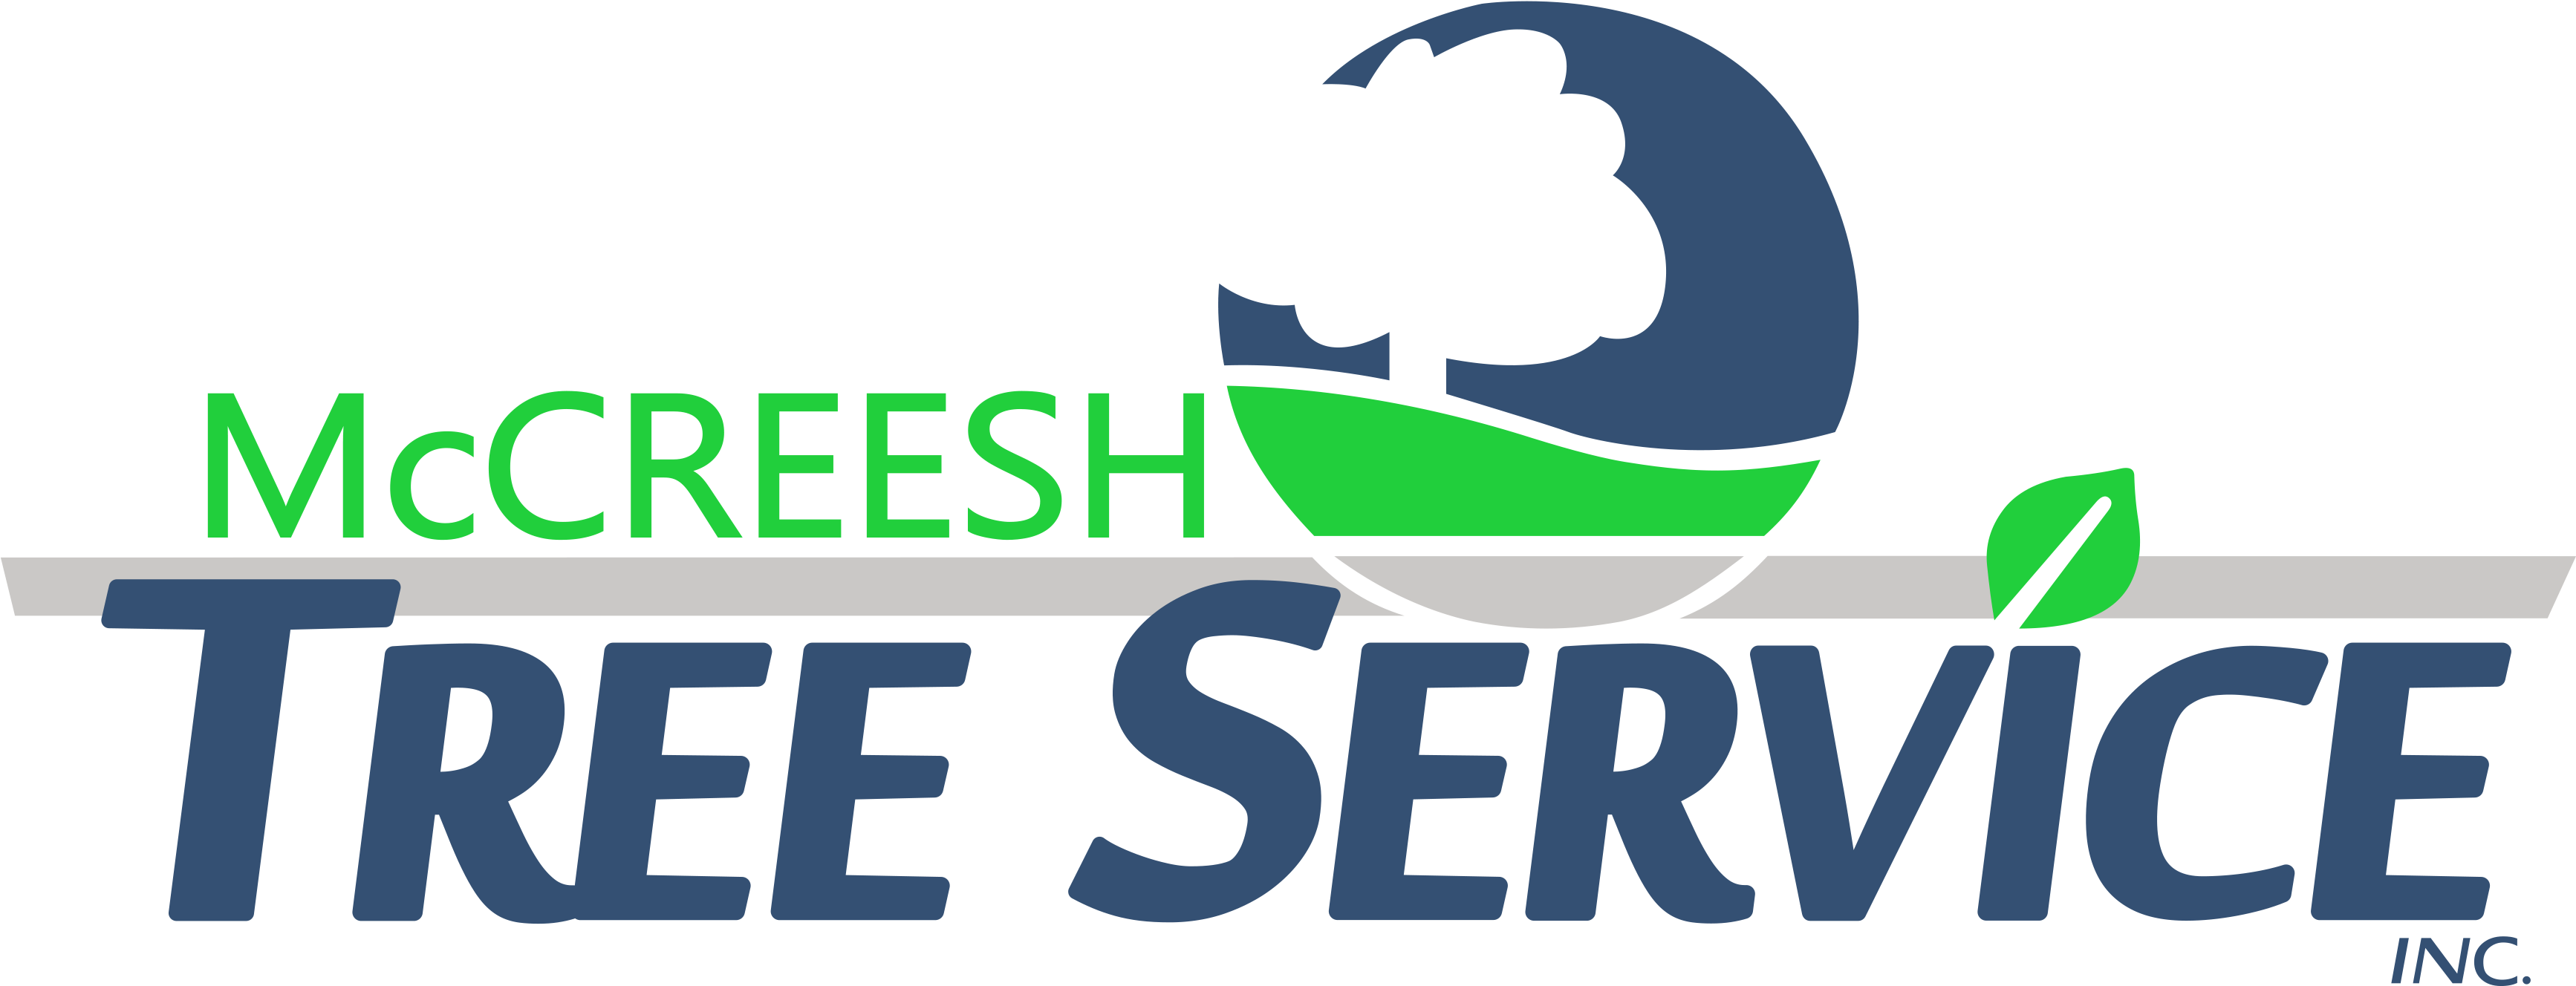 Tree Service Bucks County Pa - Graphic Design (3467x1367)